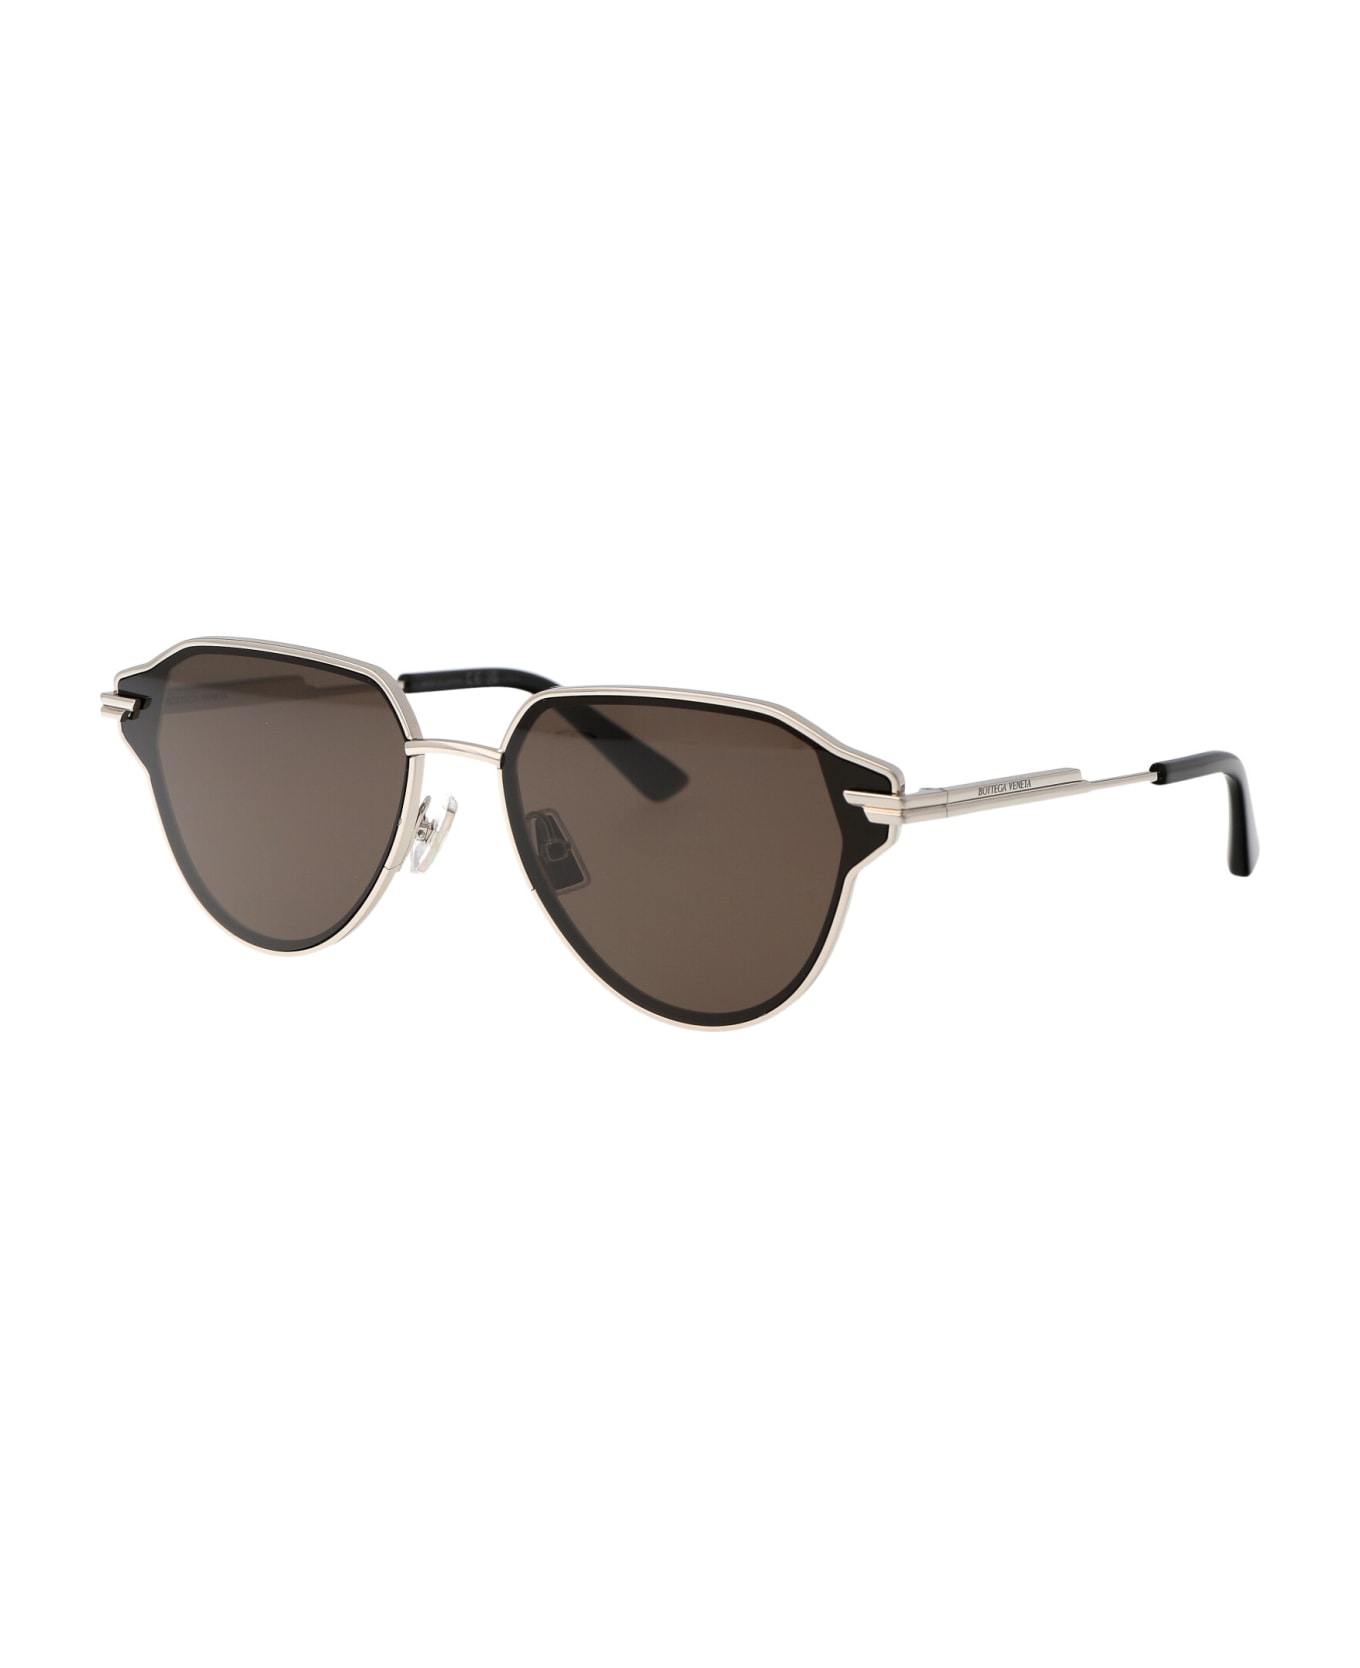 Bottega Veneta Eyewear Bv1271s Sunglasses - 004 SILVER SILVER BROWN サングラス